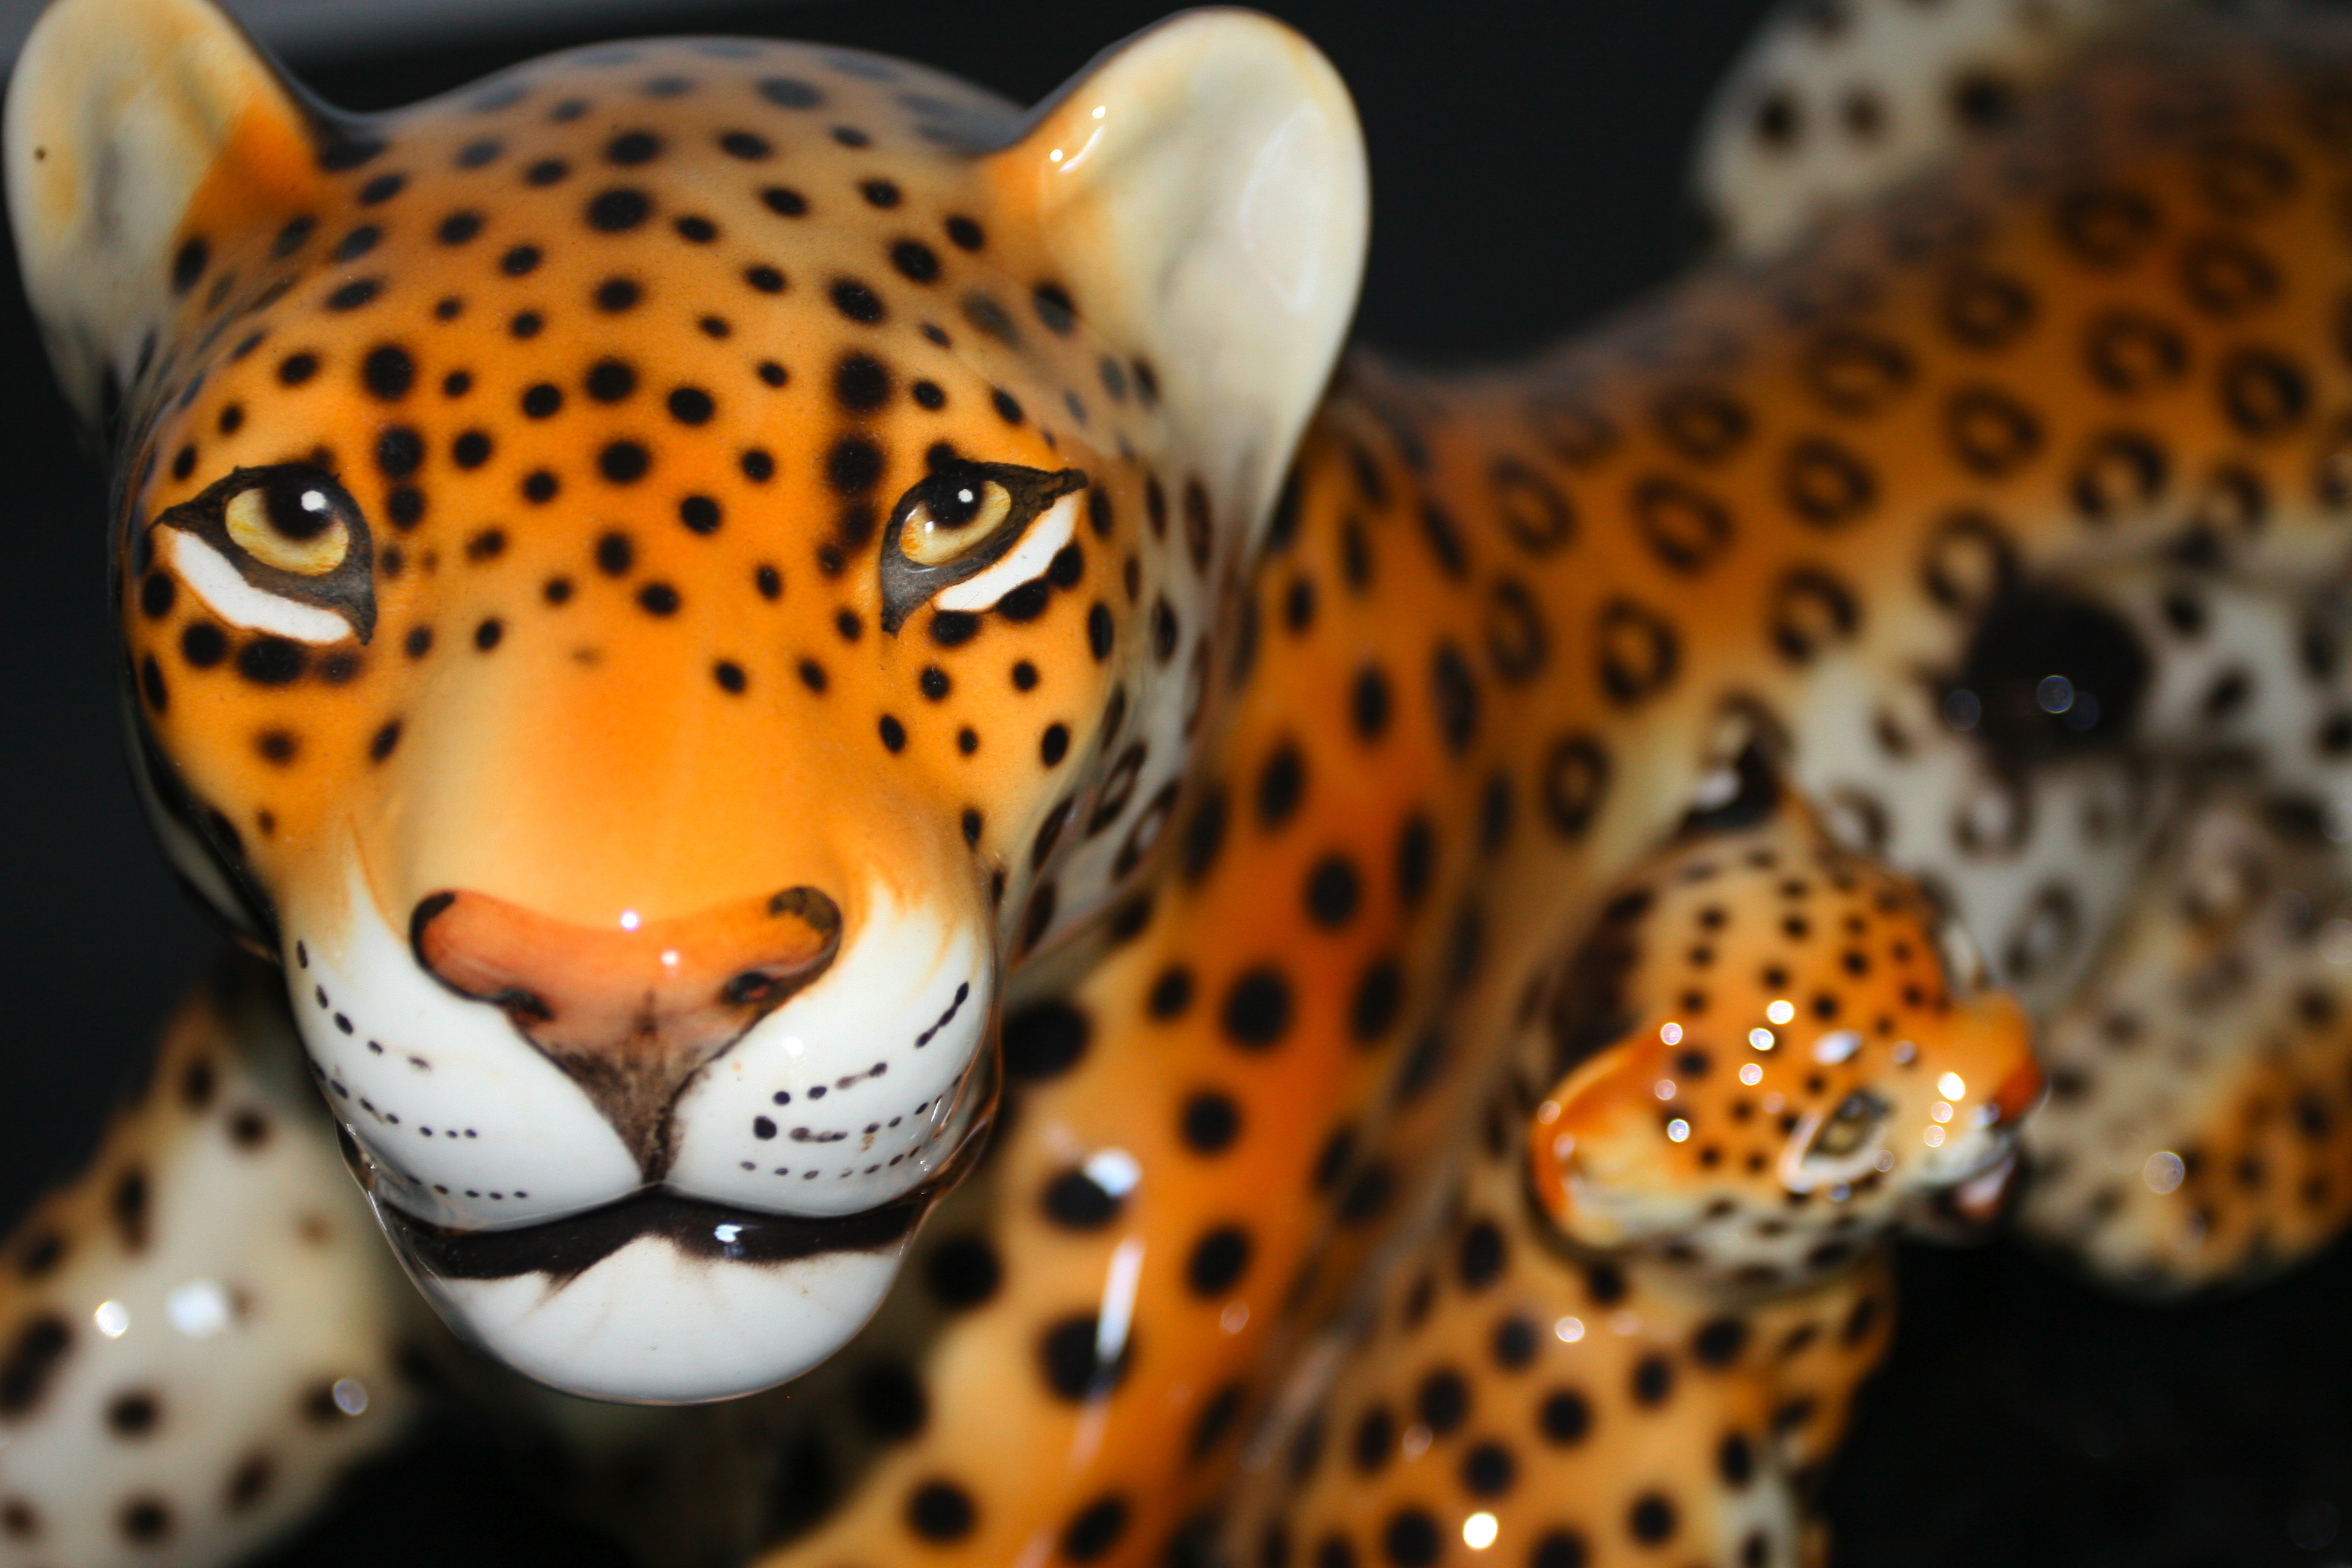 Leopard, Bspo06, Glass, Object, Orange, HQ Photo